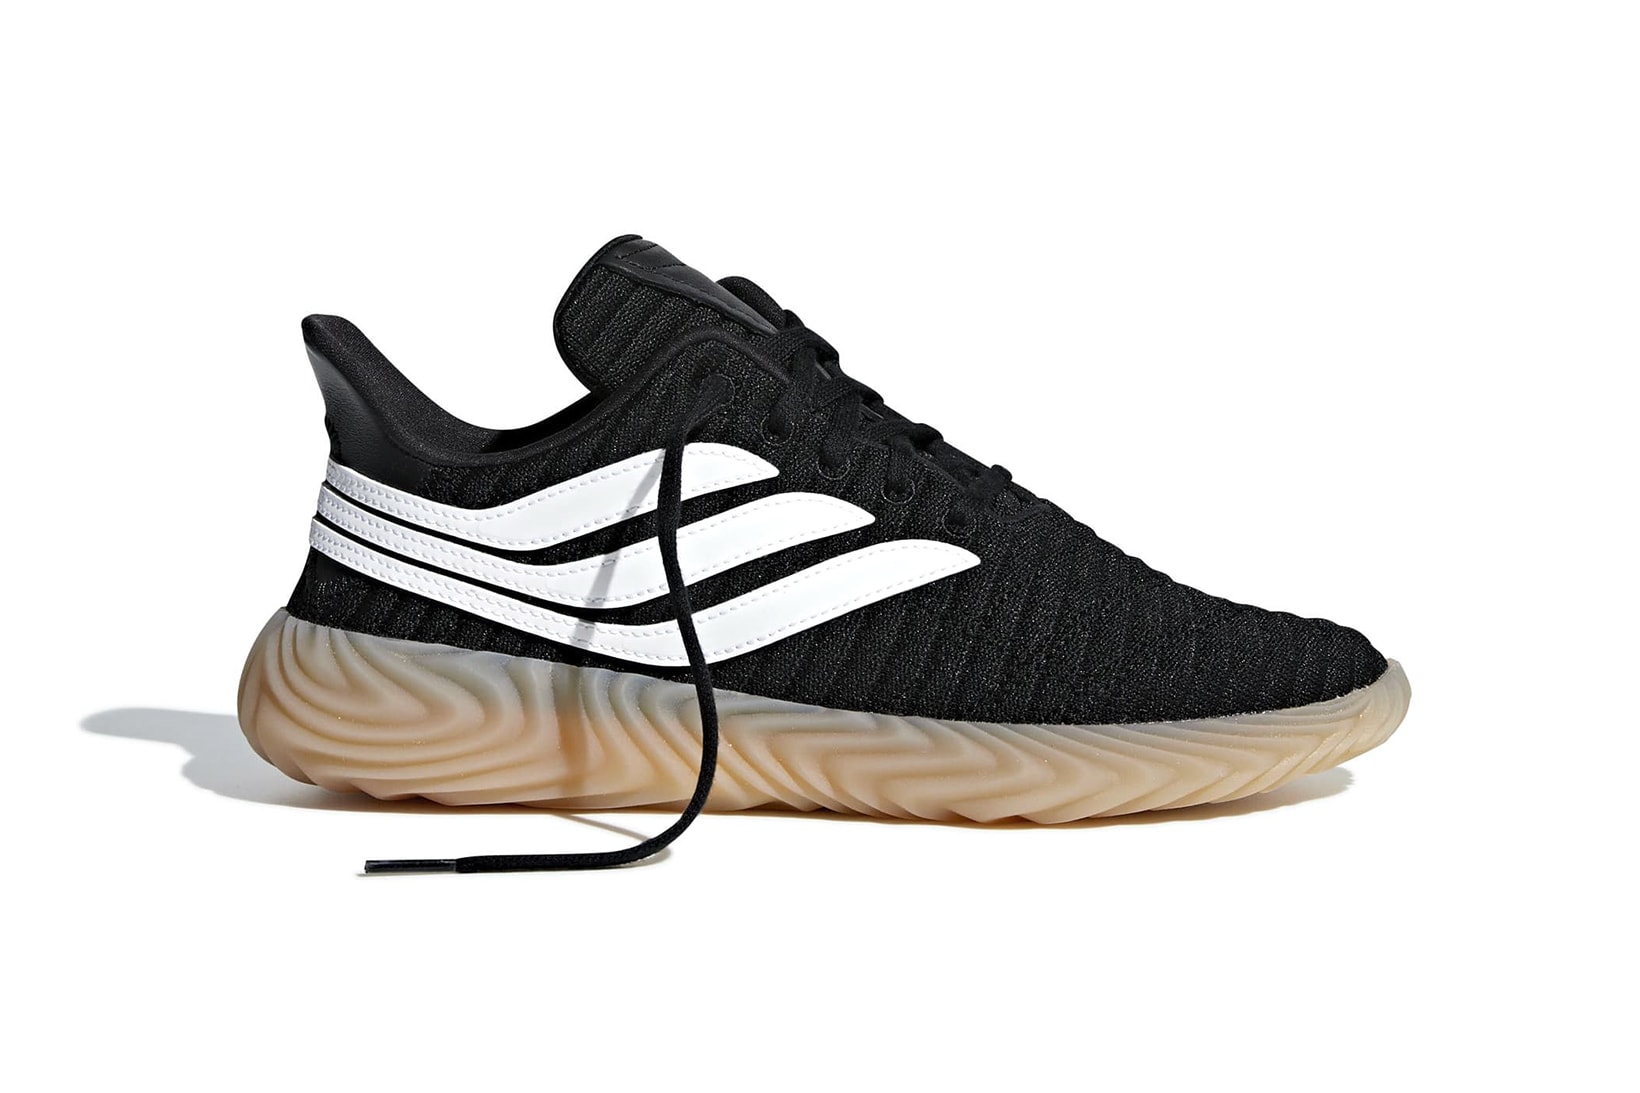 adidas Sobakov Black White Gum july 2018 release date info drop sneakers shoes footwear soccer football